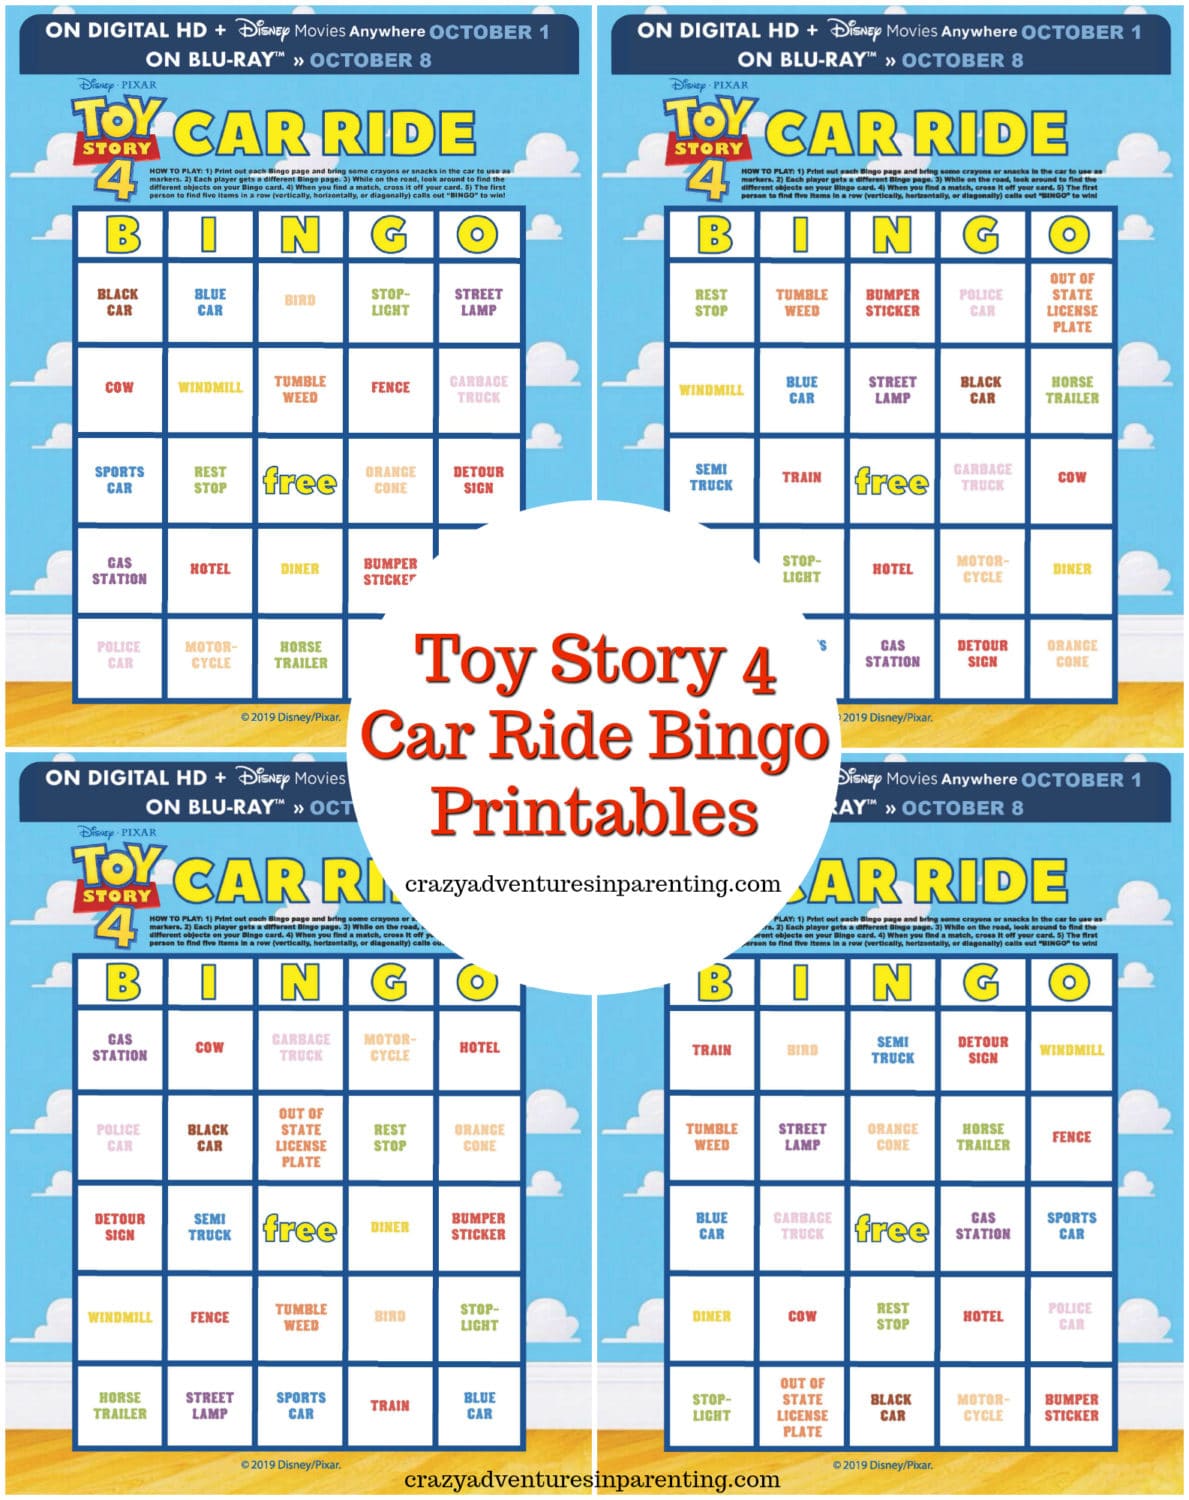 Toy Story 4 Car Ride Bingo Printables for Kids